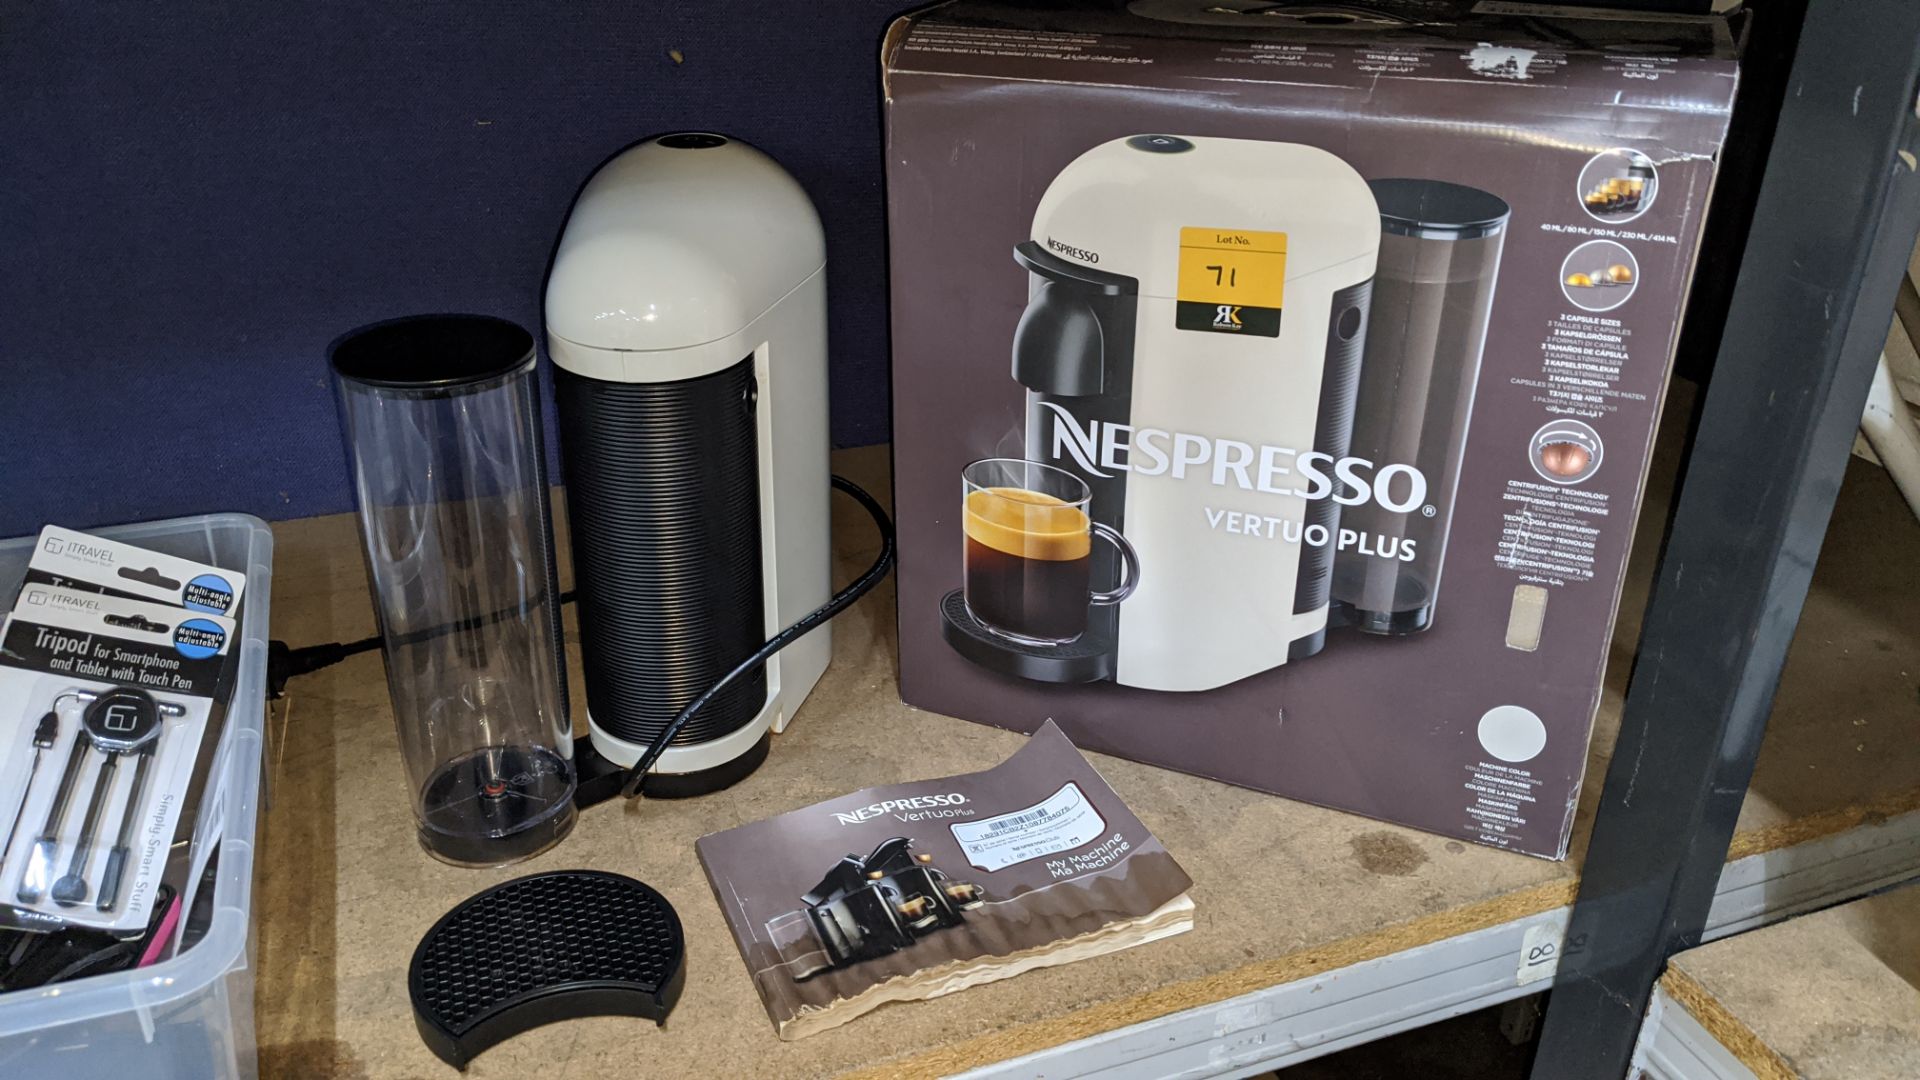 Nespresso Vertuo Plus coffee machine including box & manual. IMPORTANT: Please remember goods